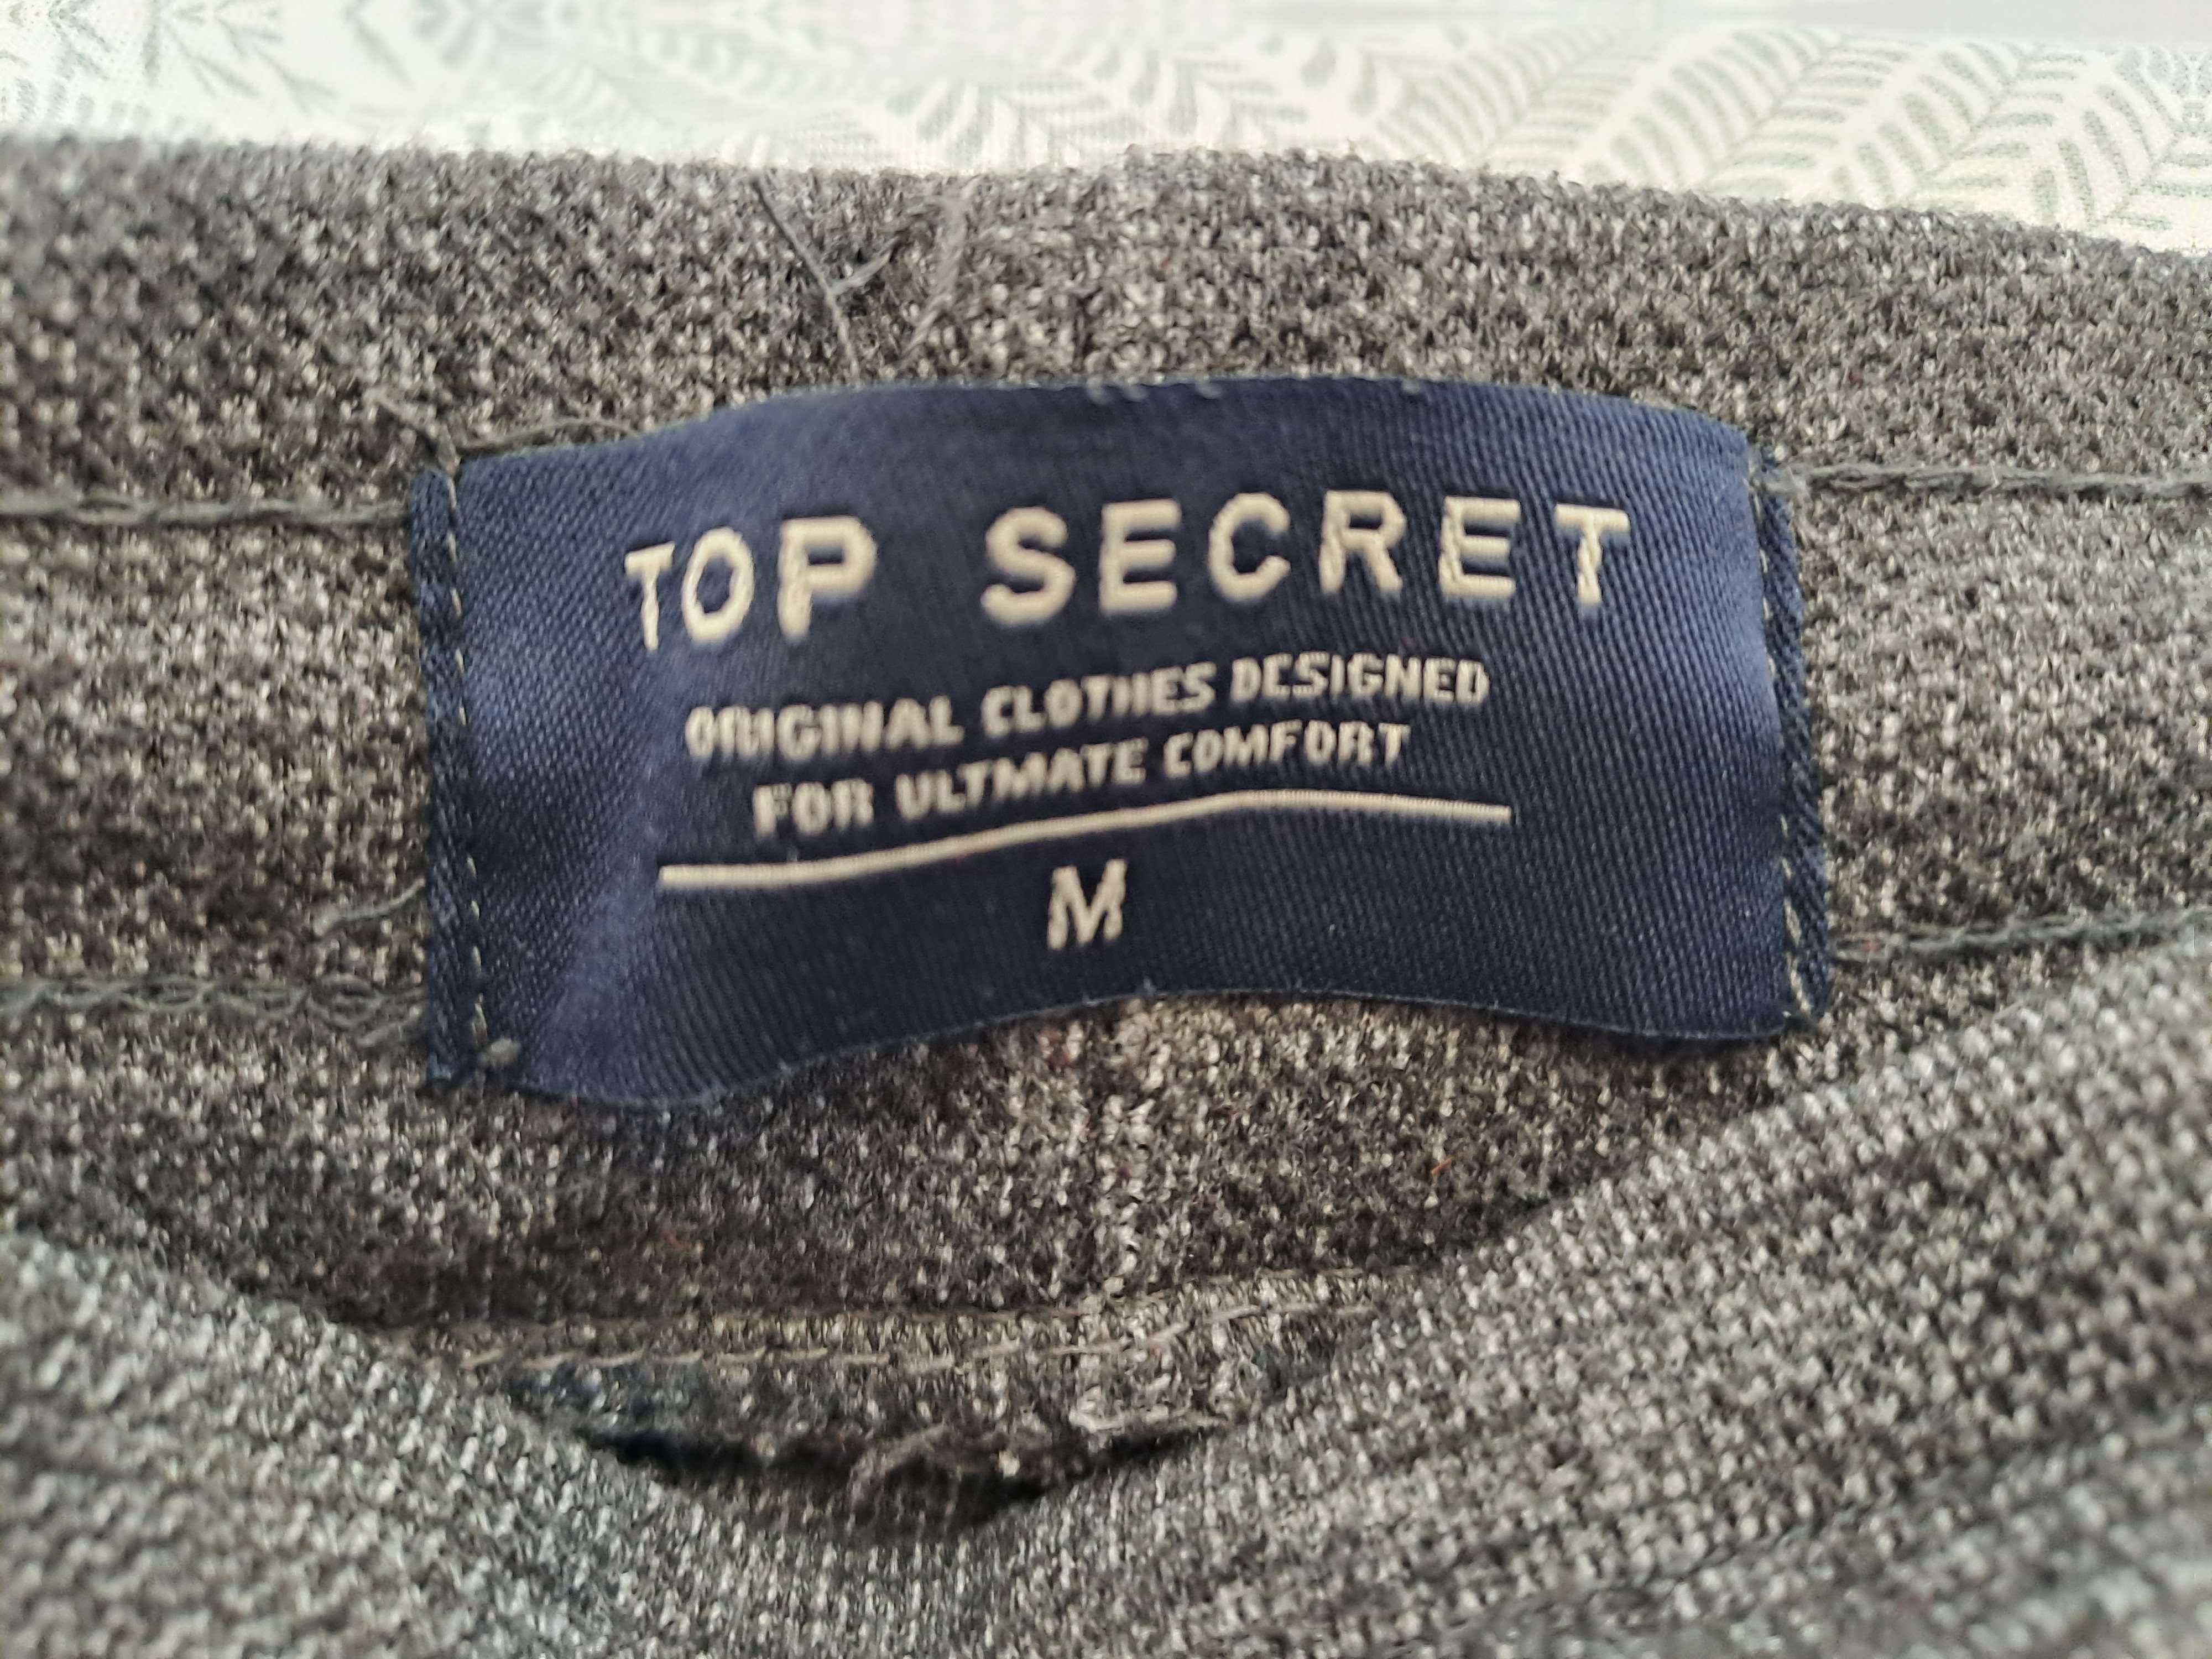 Spodnie Top Secret R. M